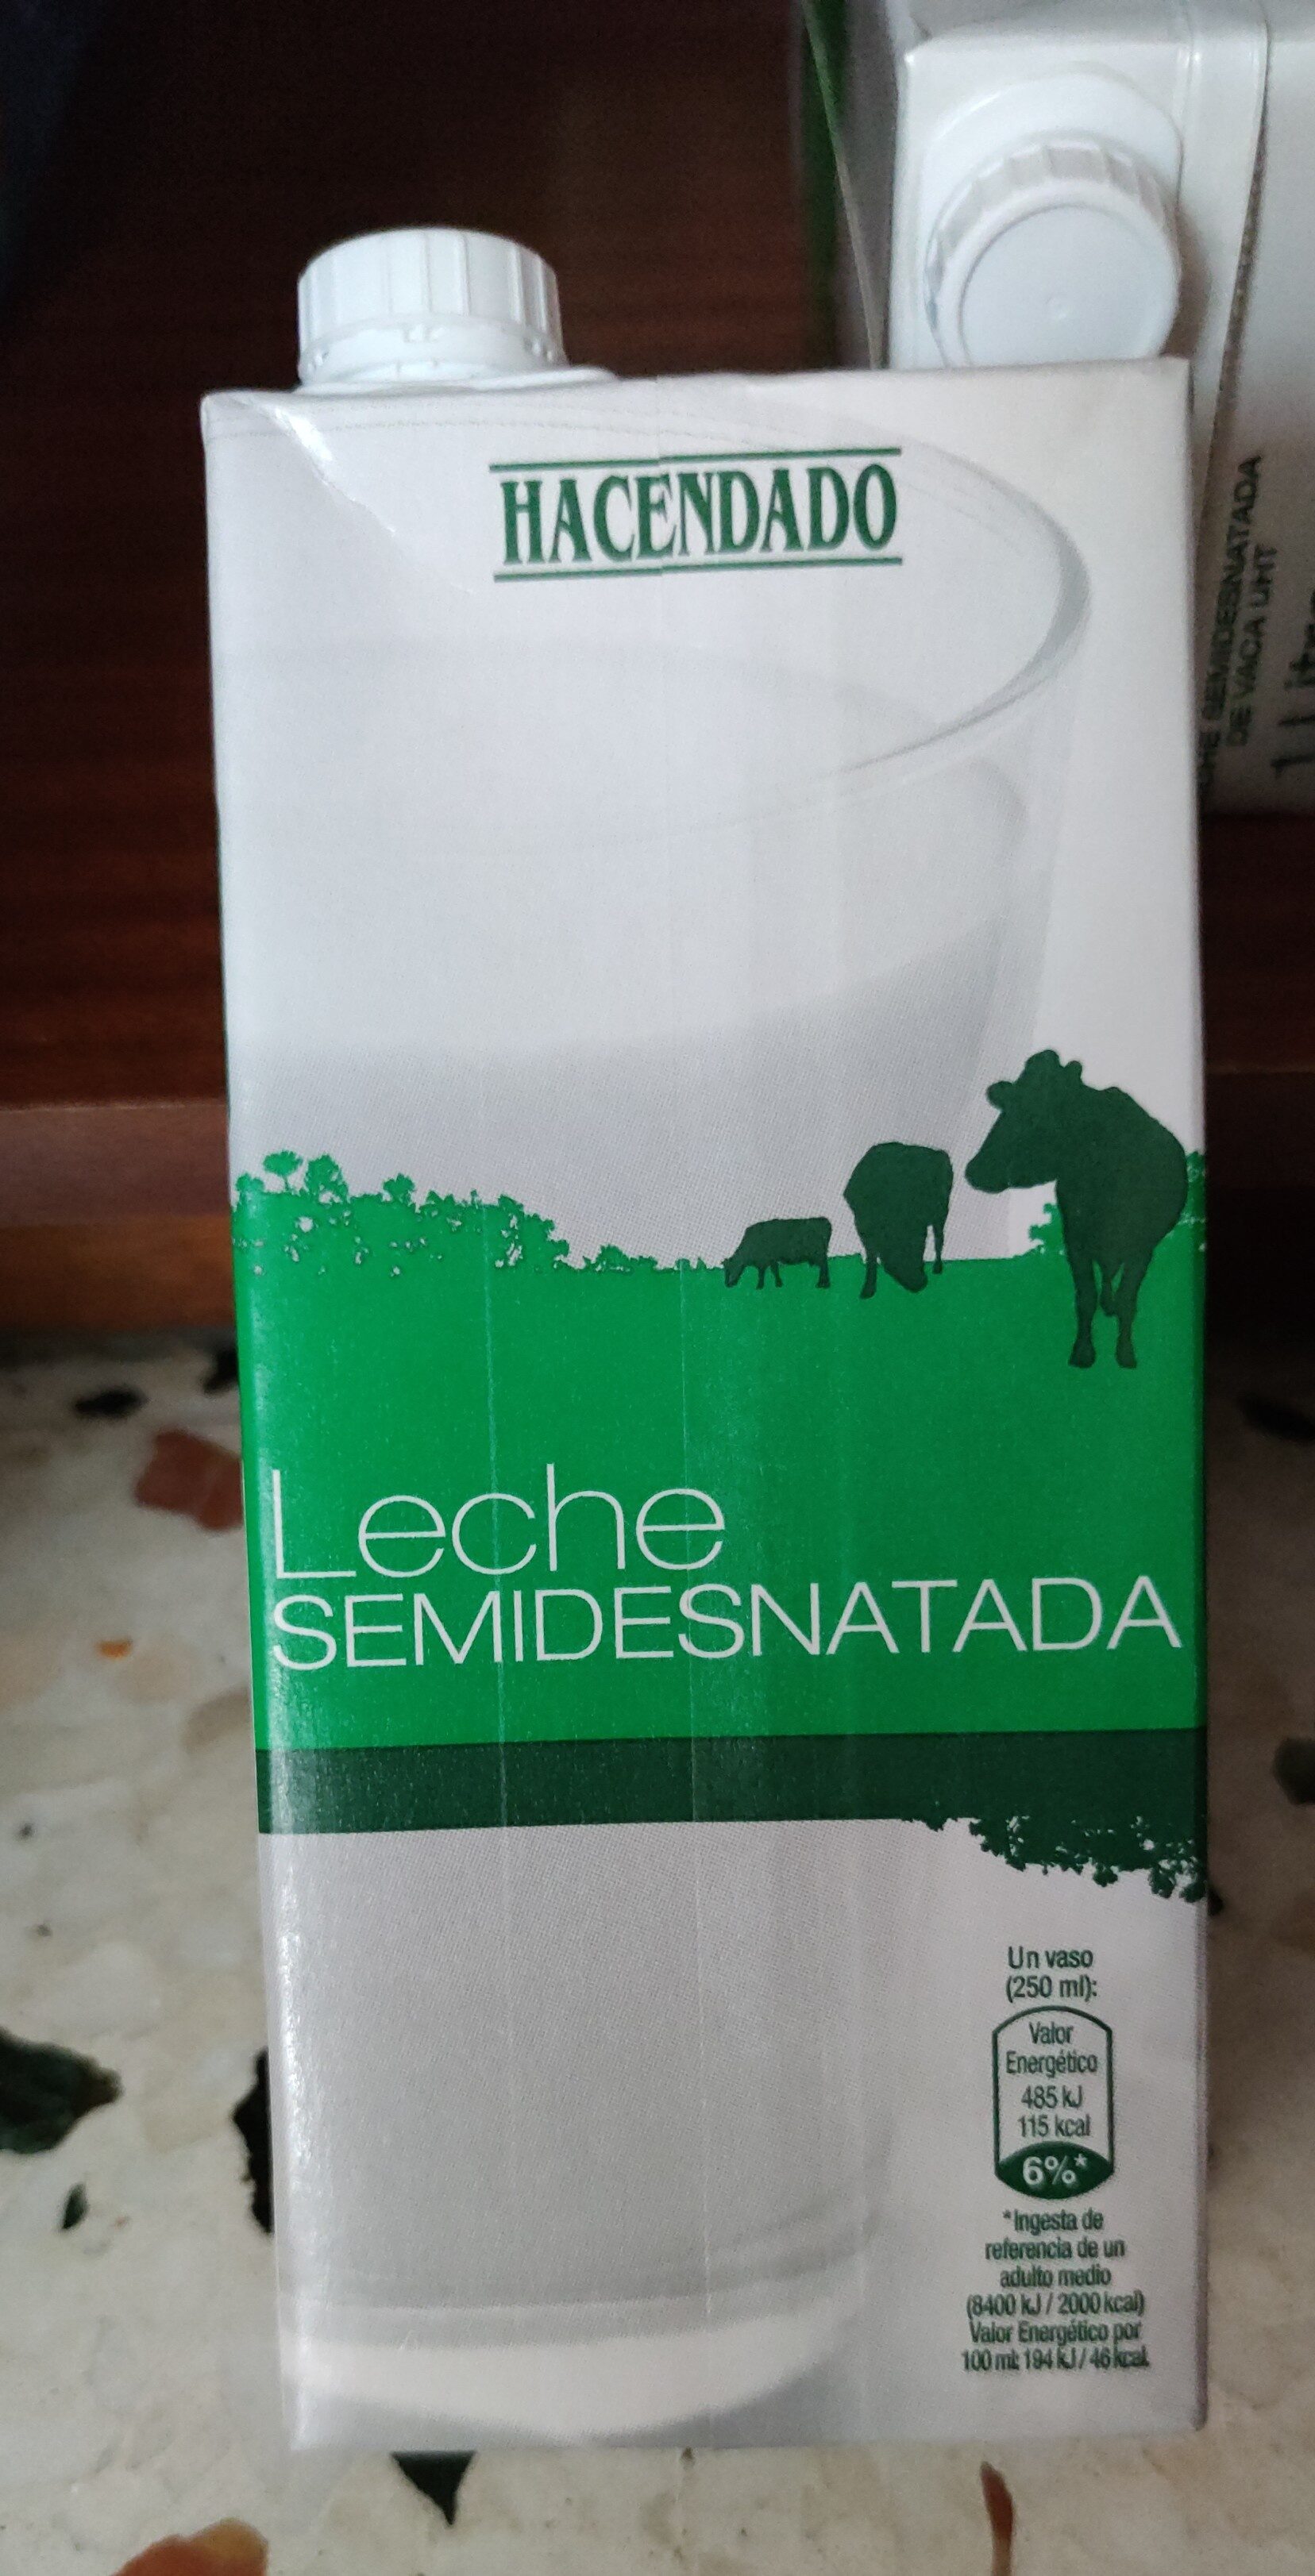 Leche semidesnatada - Ingredients